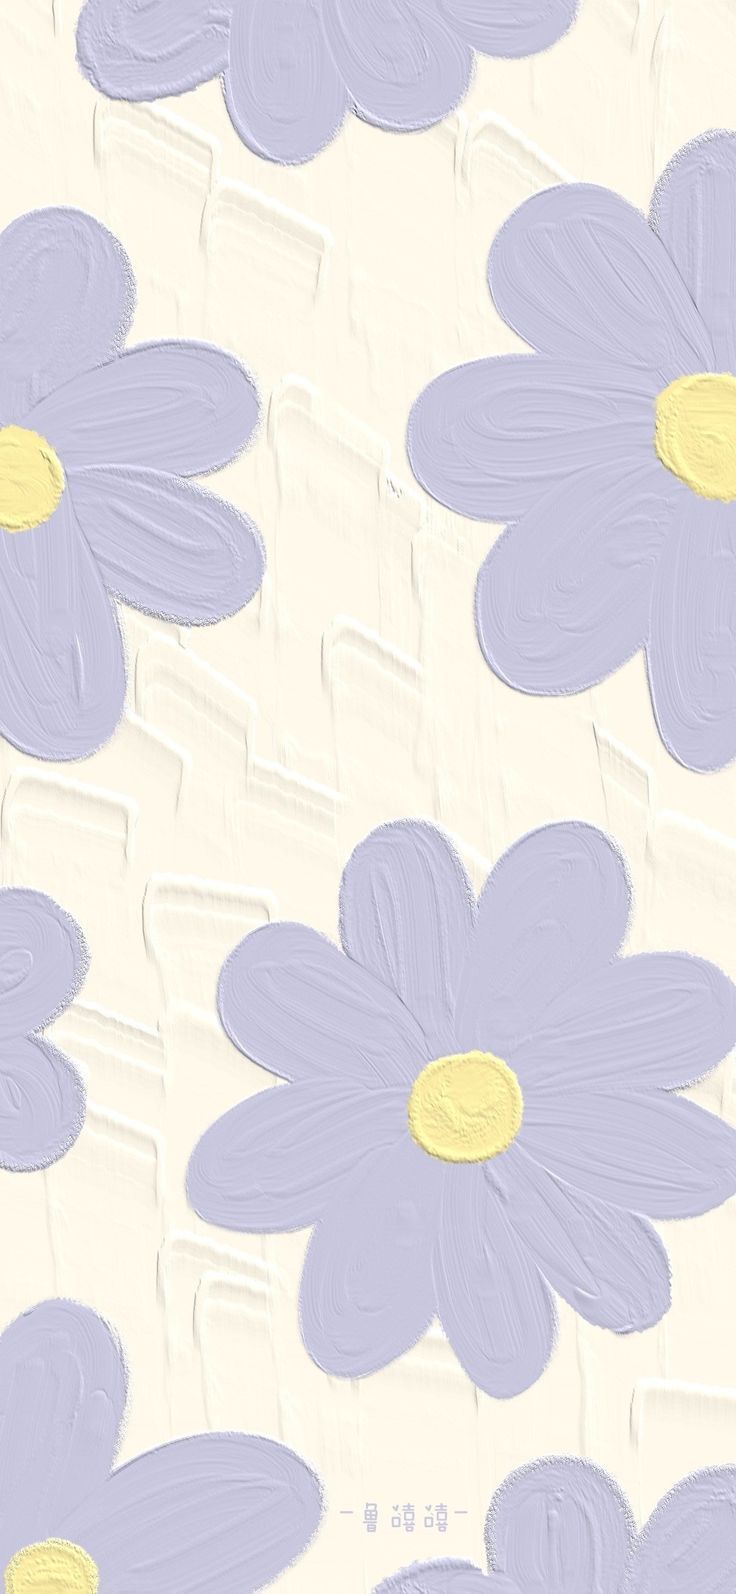 Pin oleh Skye di Aesthetic Compilations di 2021  Ilustrasi vintage Seni ilustrasi Abstrak  Ilustrasi vintage Ilustrasi Wallpaper bunga aster